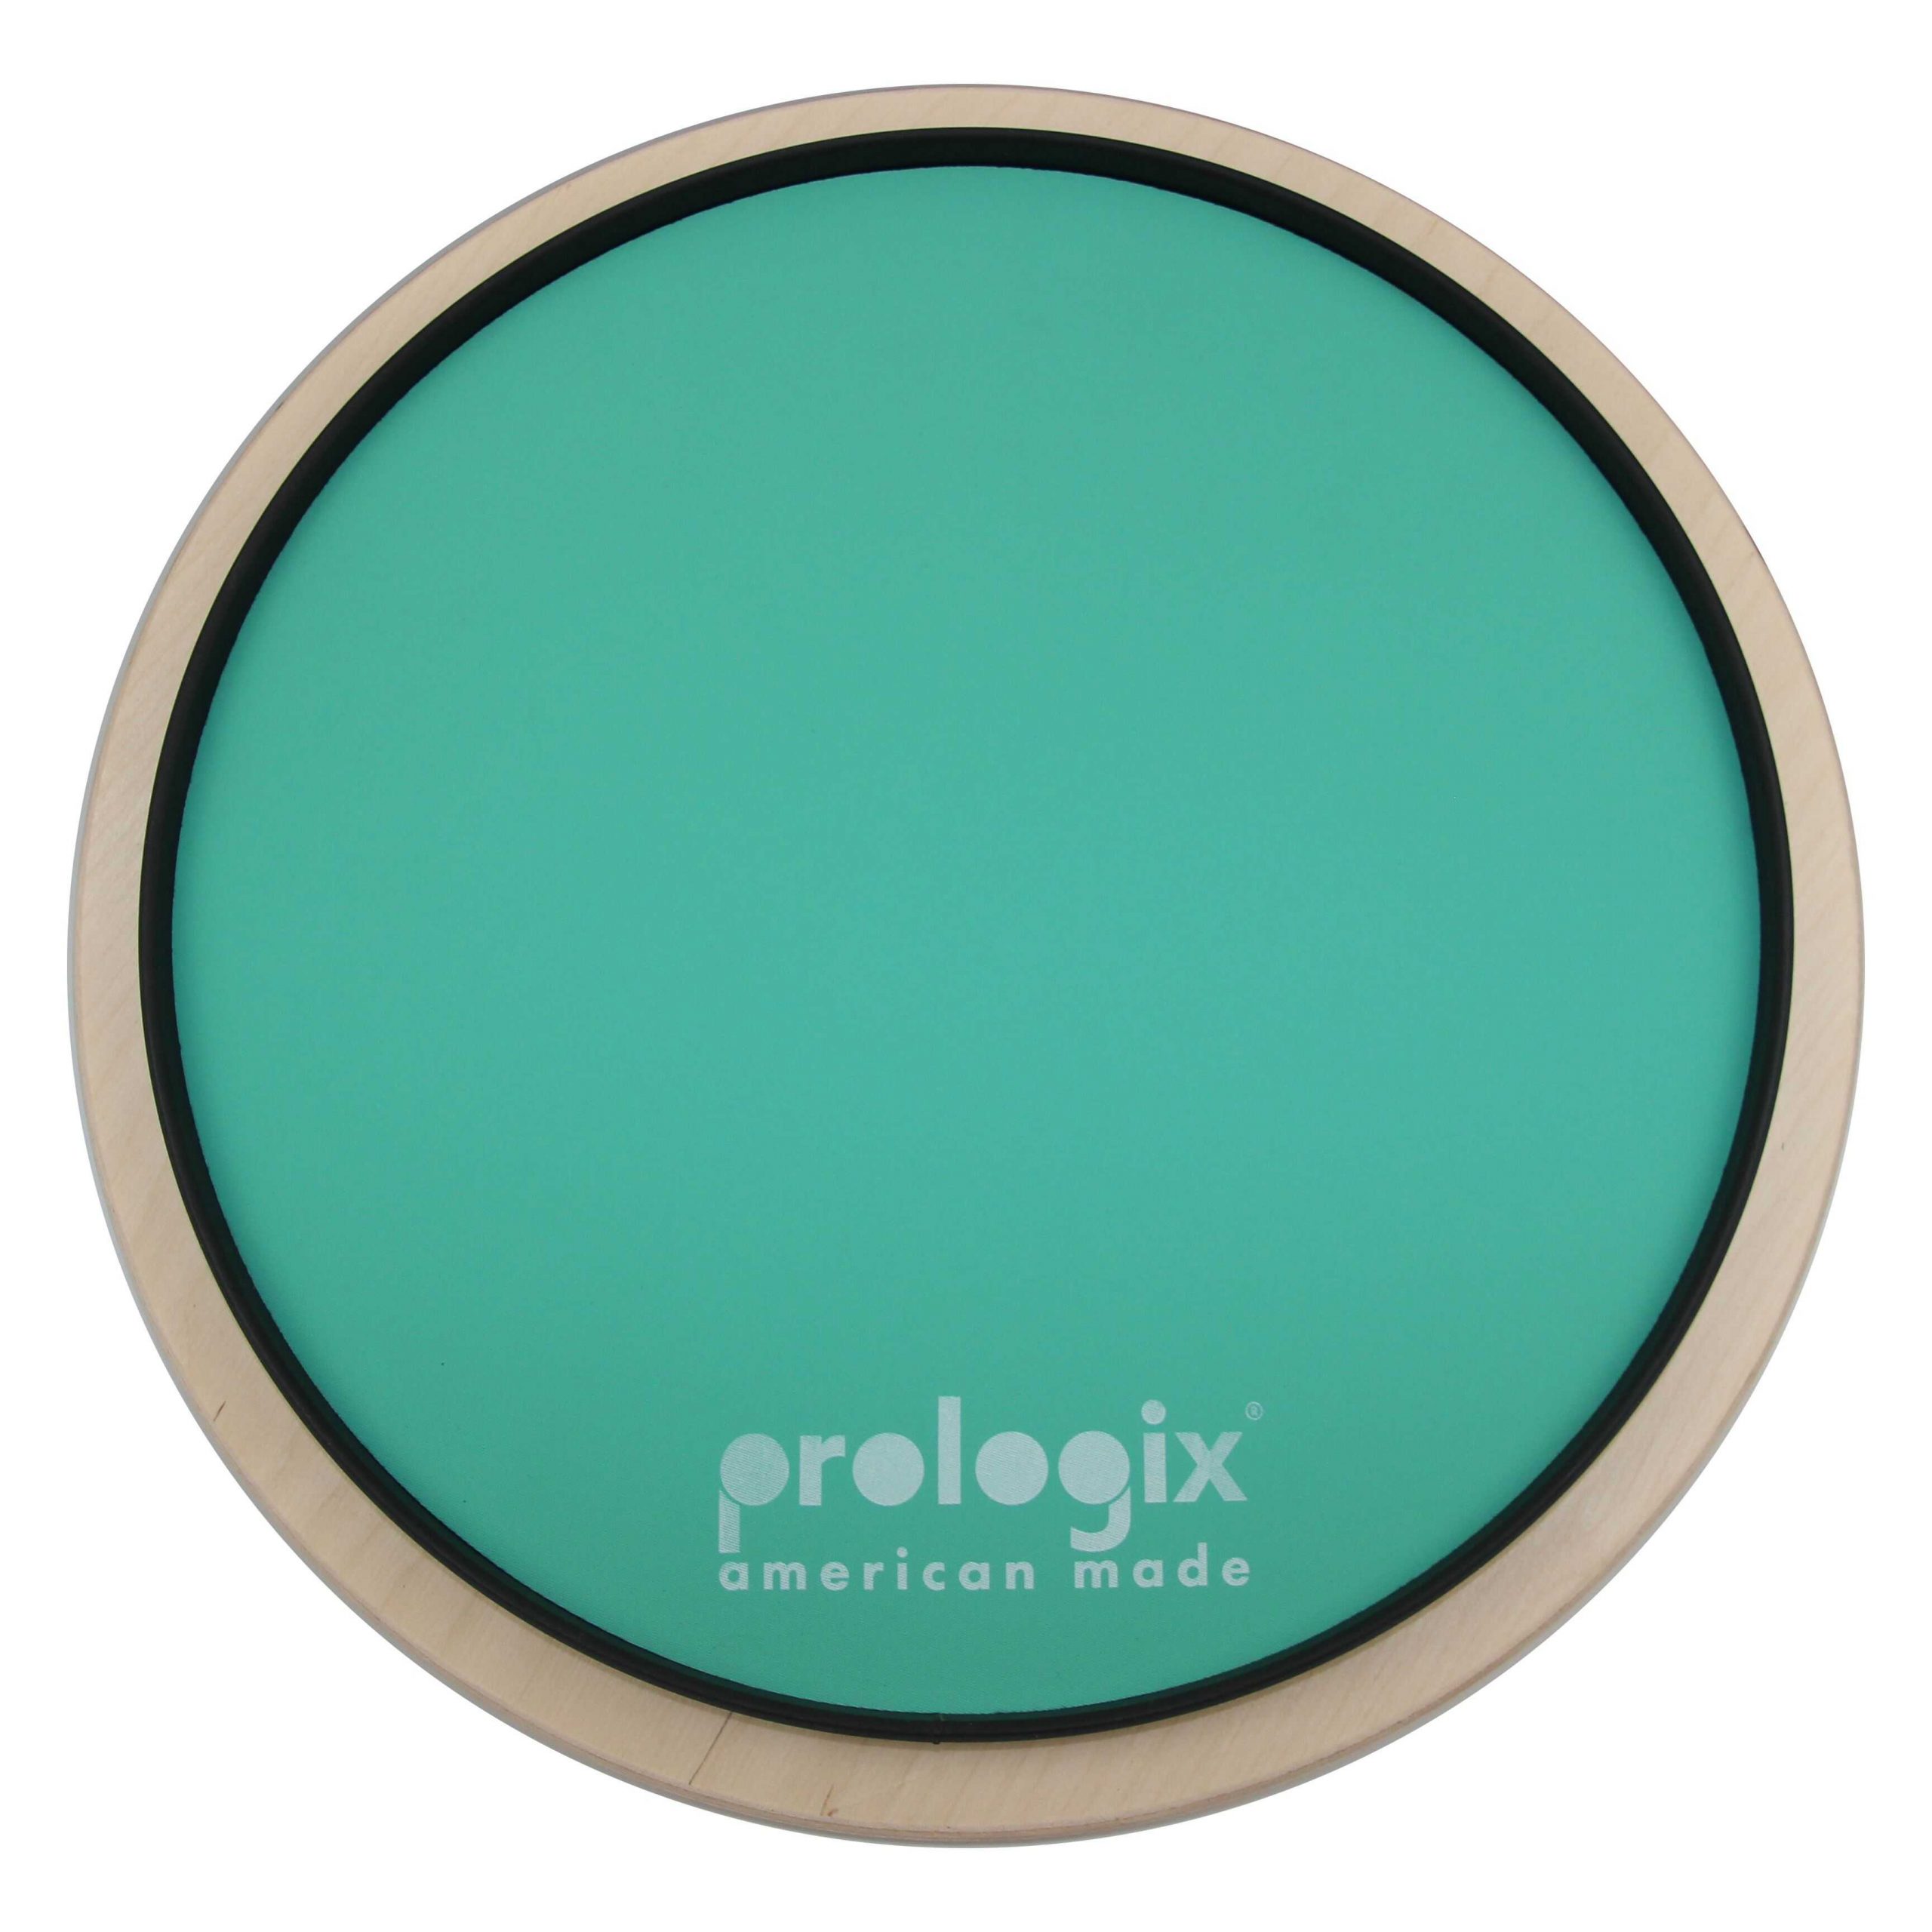 Prologix Logix Green Pad 12" with Rim Light Resistance